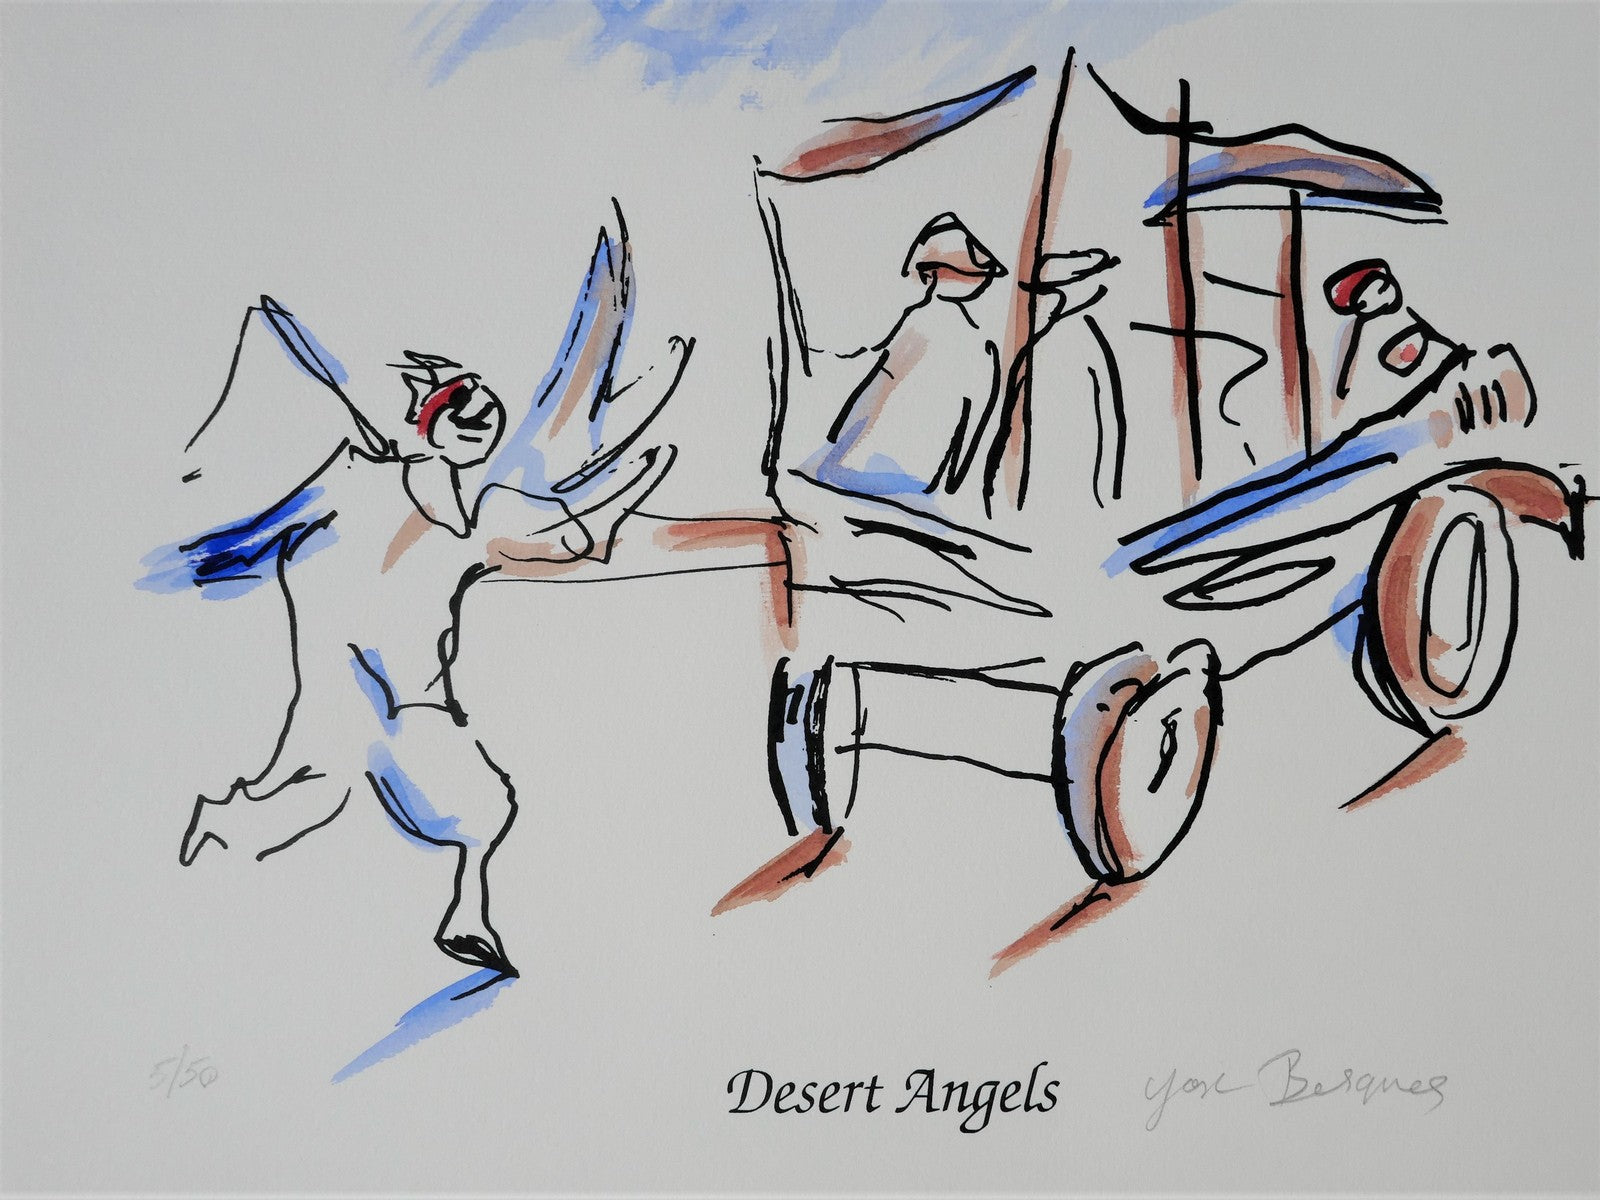 Yosl Bergner 'Desert Angels, from The Kimberley Album'